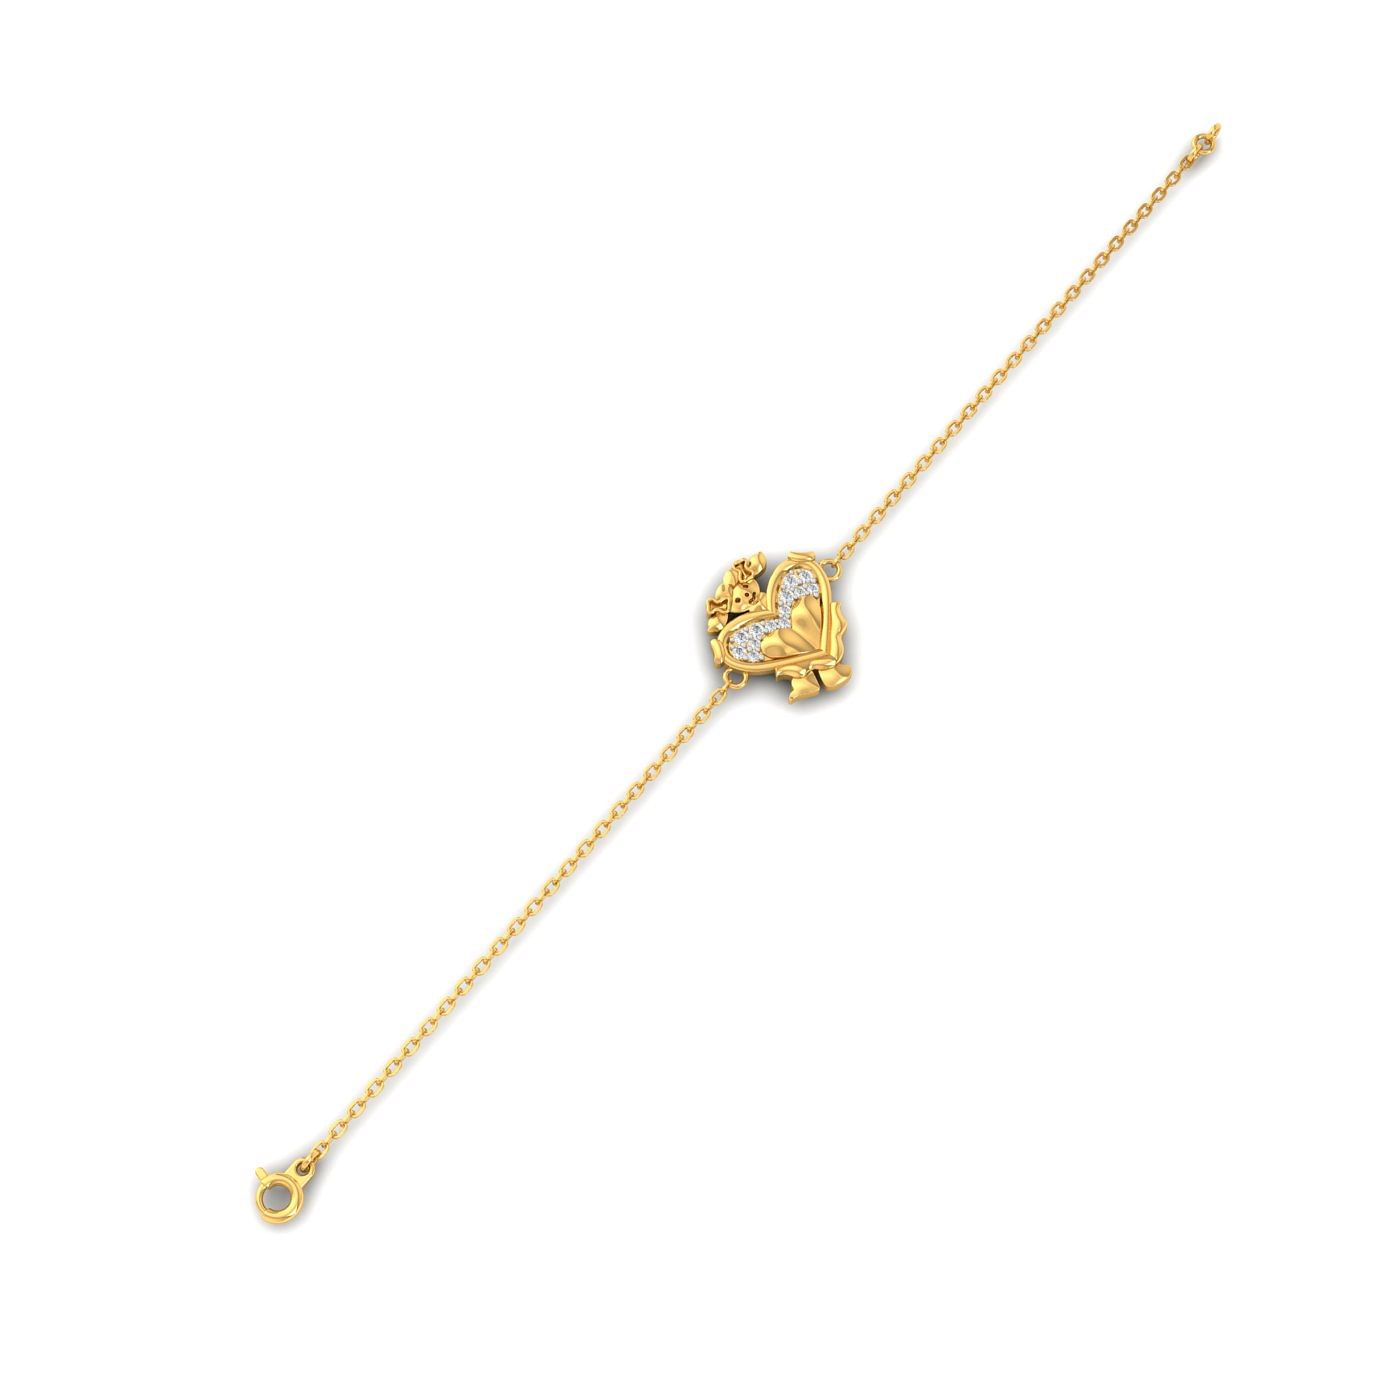 71897 xuping senco gold jewellery price| Alibaba.com